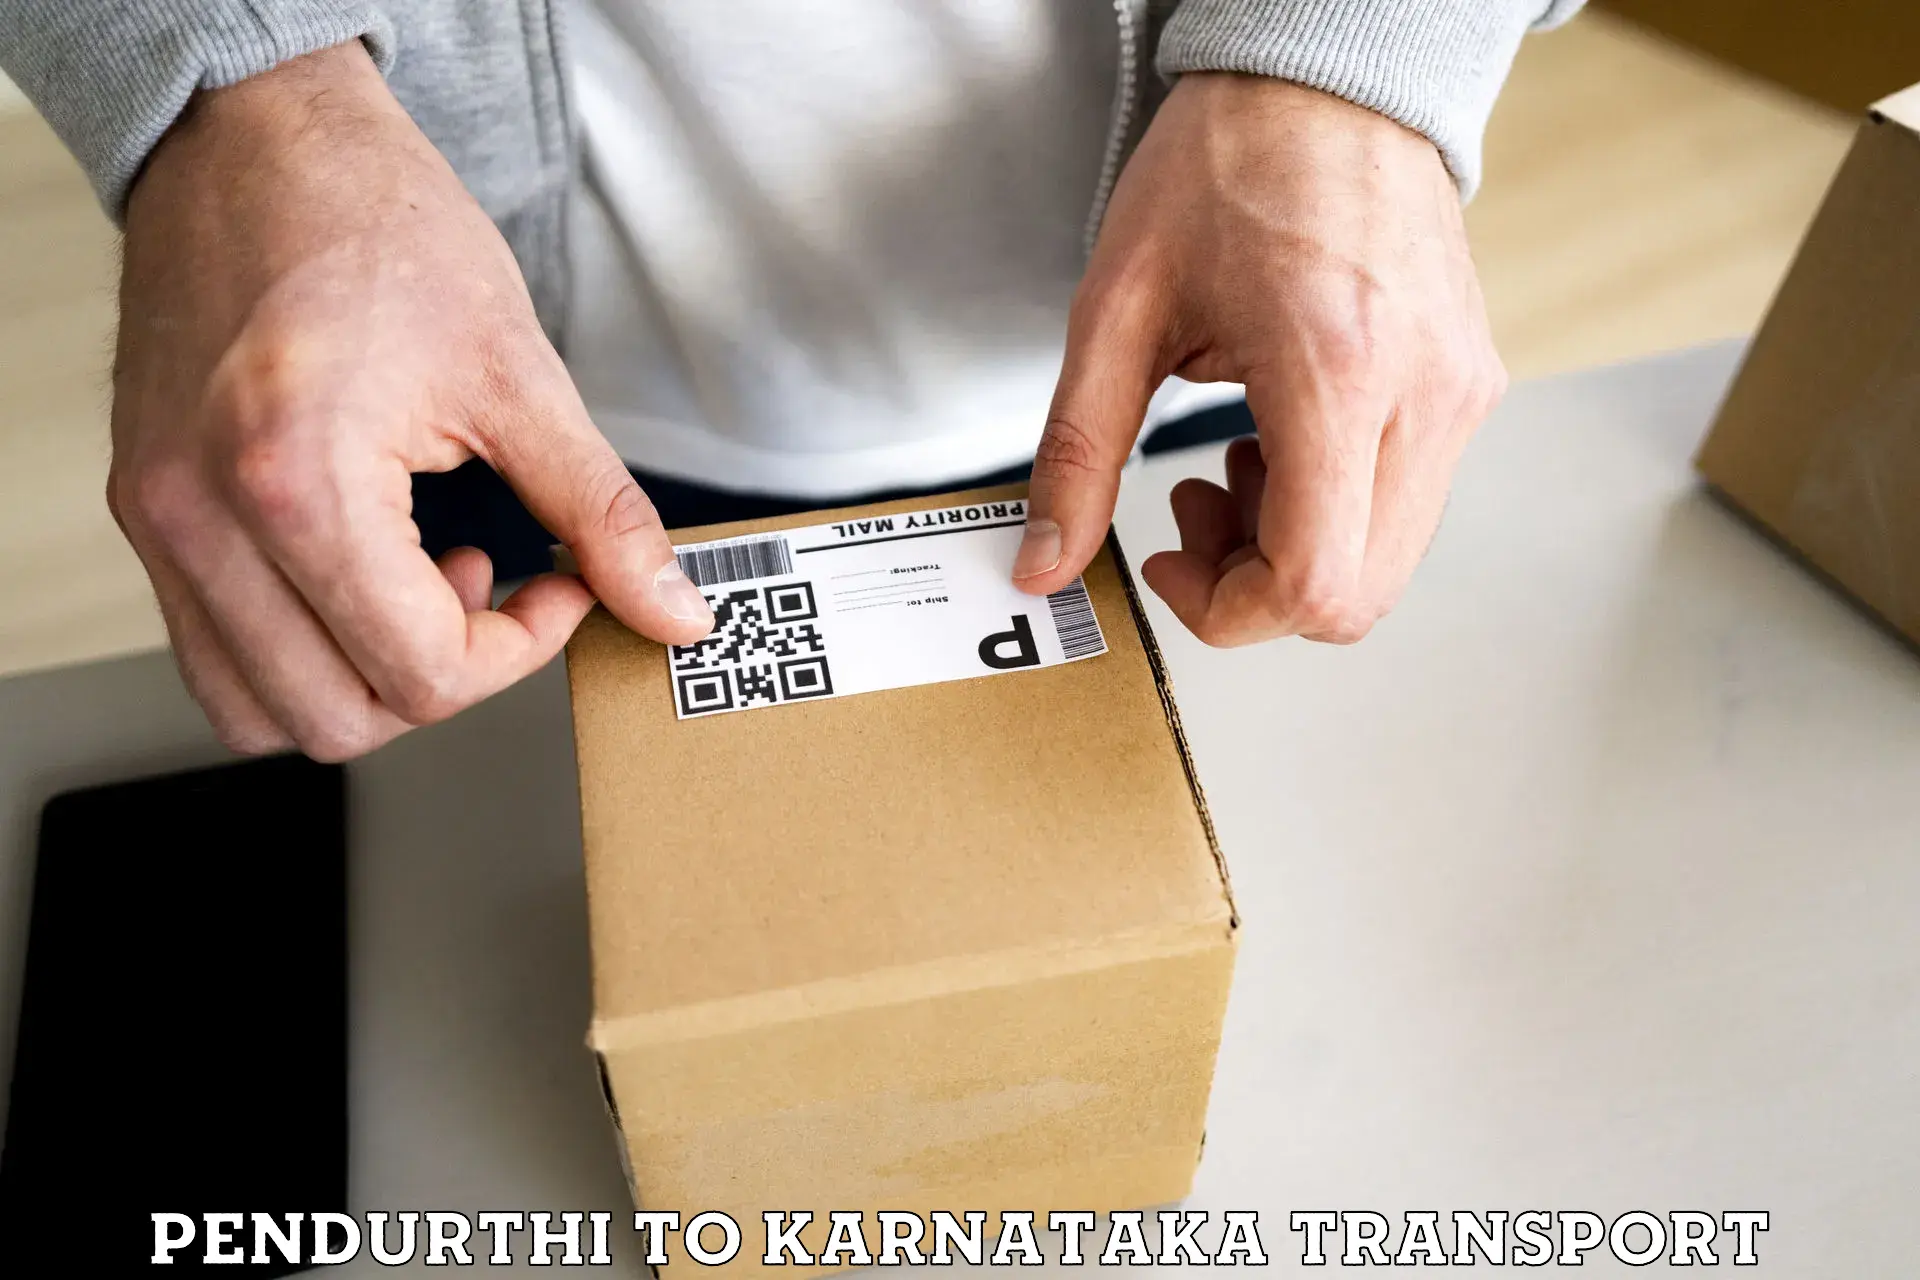 Delivery service Pendurthi to Karwar